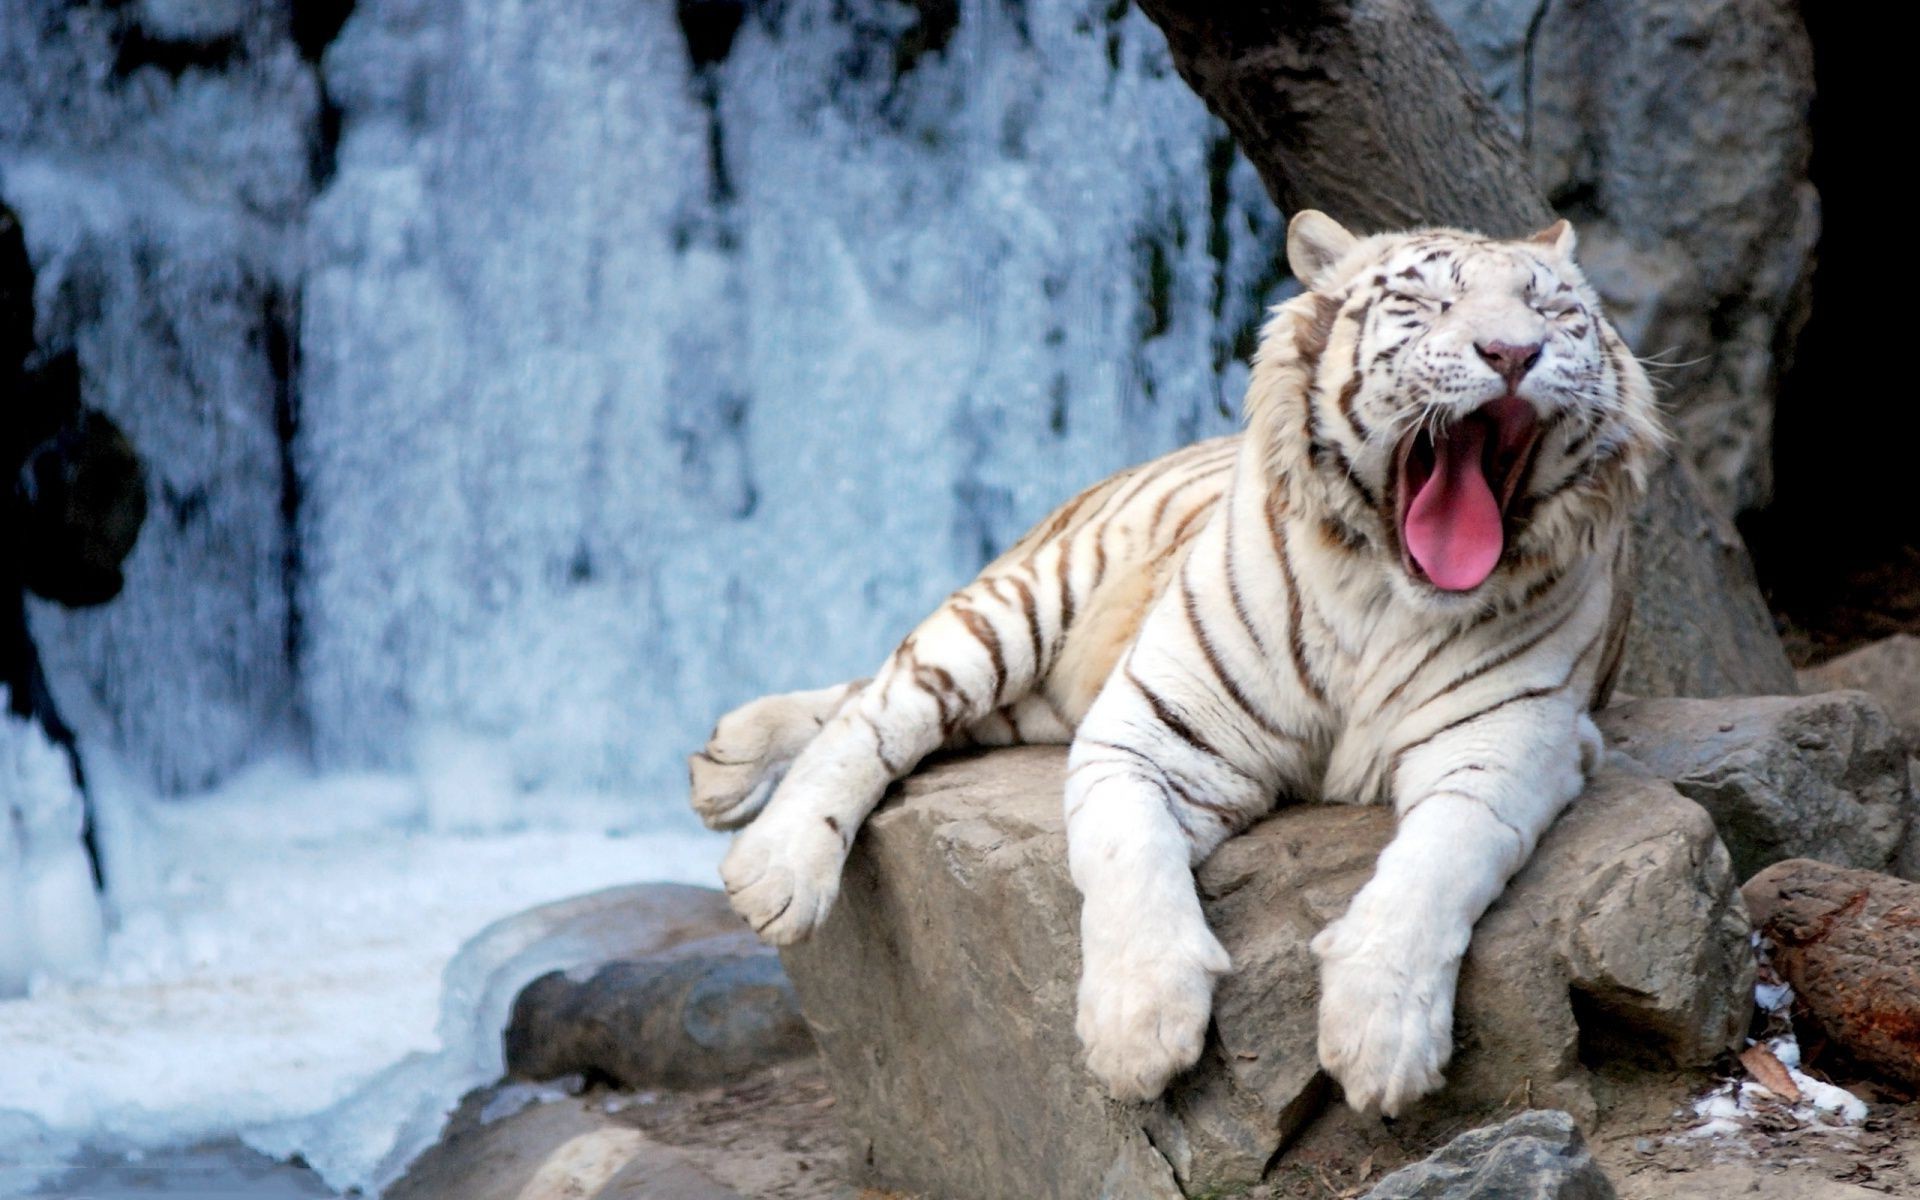 tigers nature wildlife mammal zoo tiger cat wild winter danger snow big animal